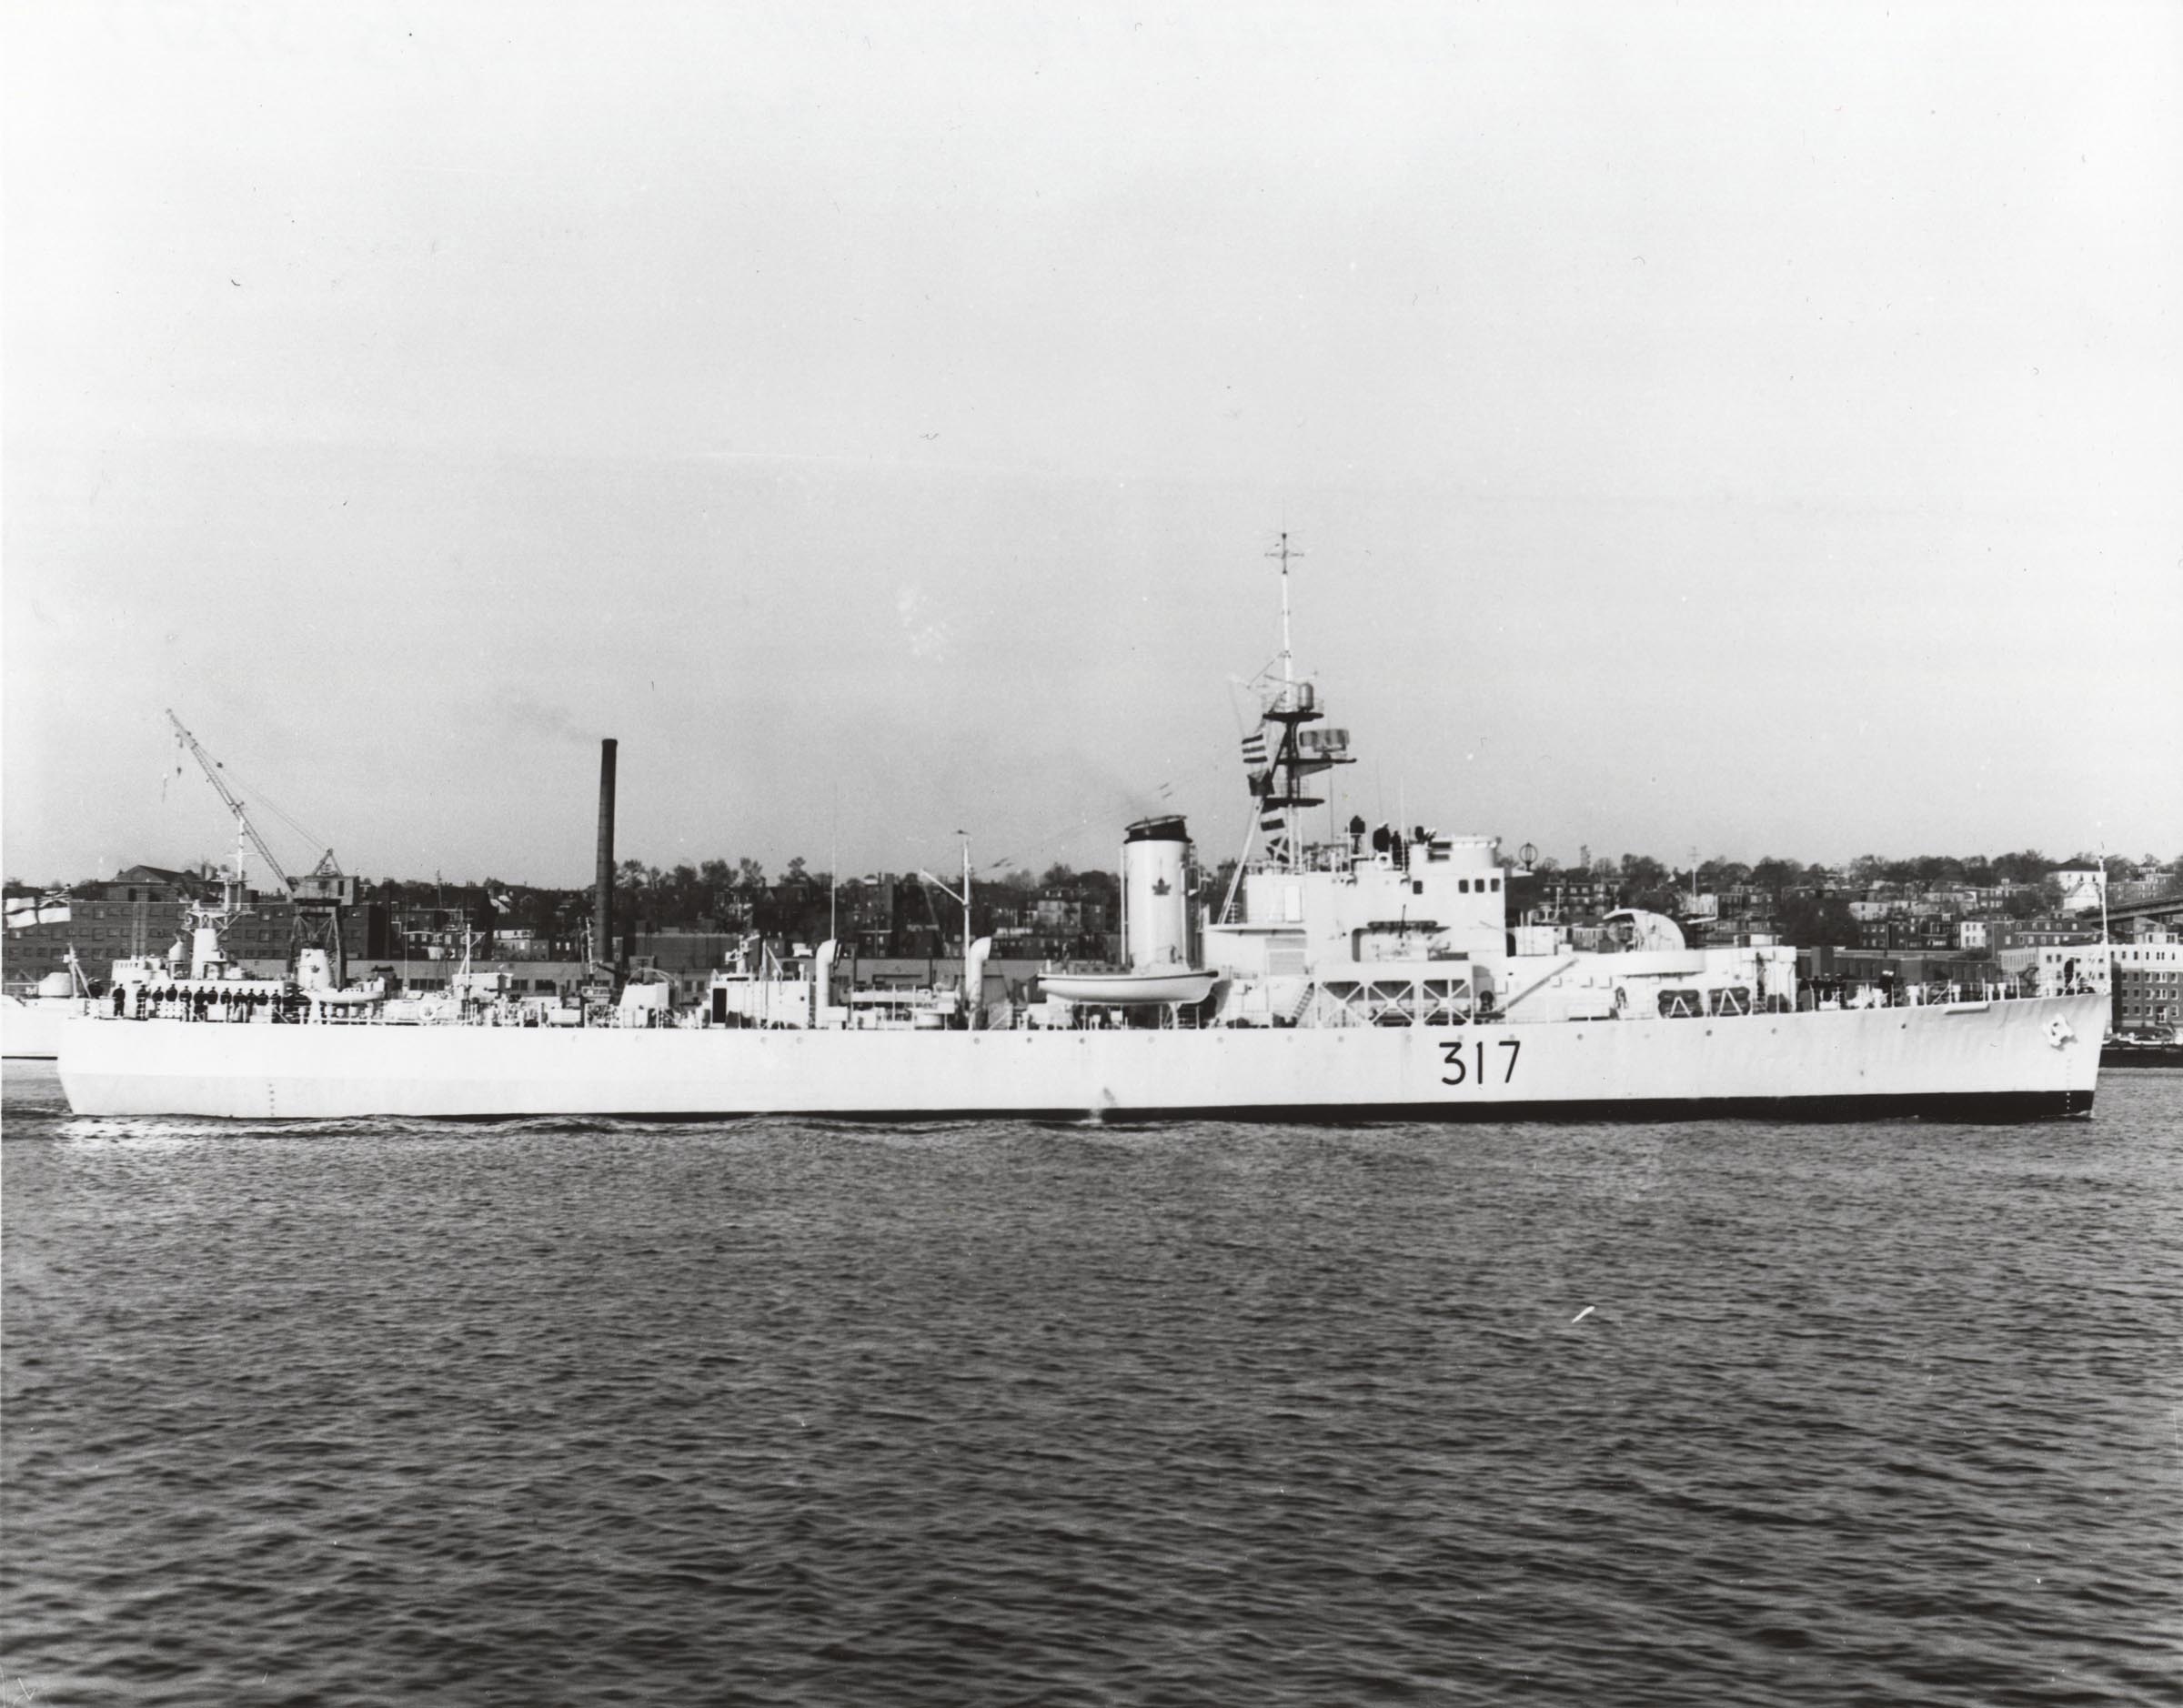 Post-war HMCS CAP de la MADELEINE (Prestonian Class)